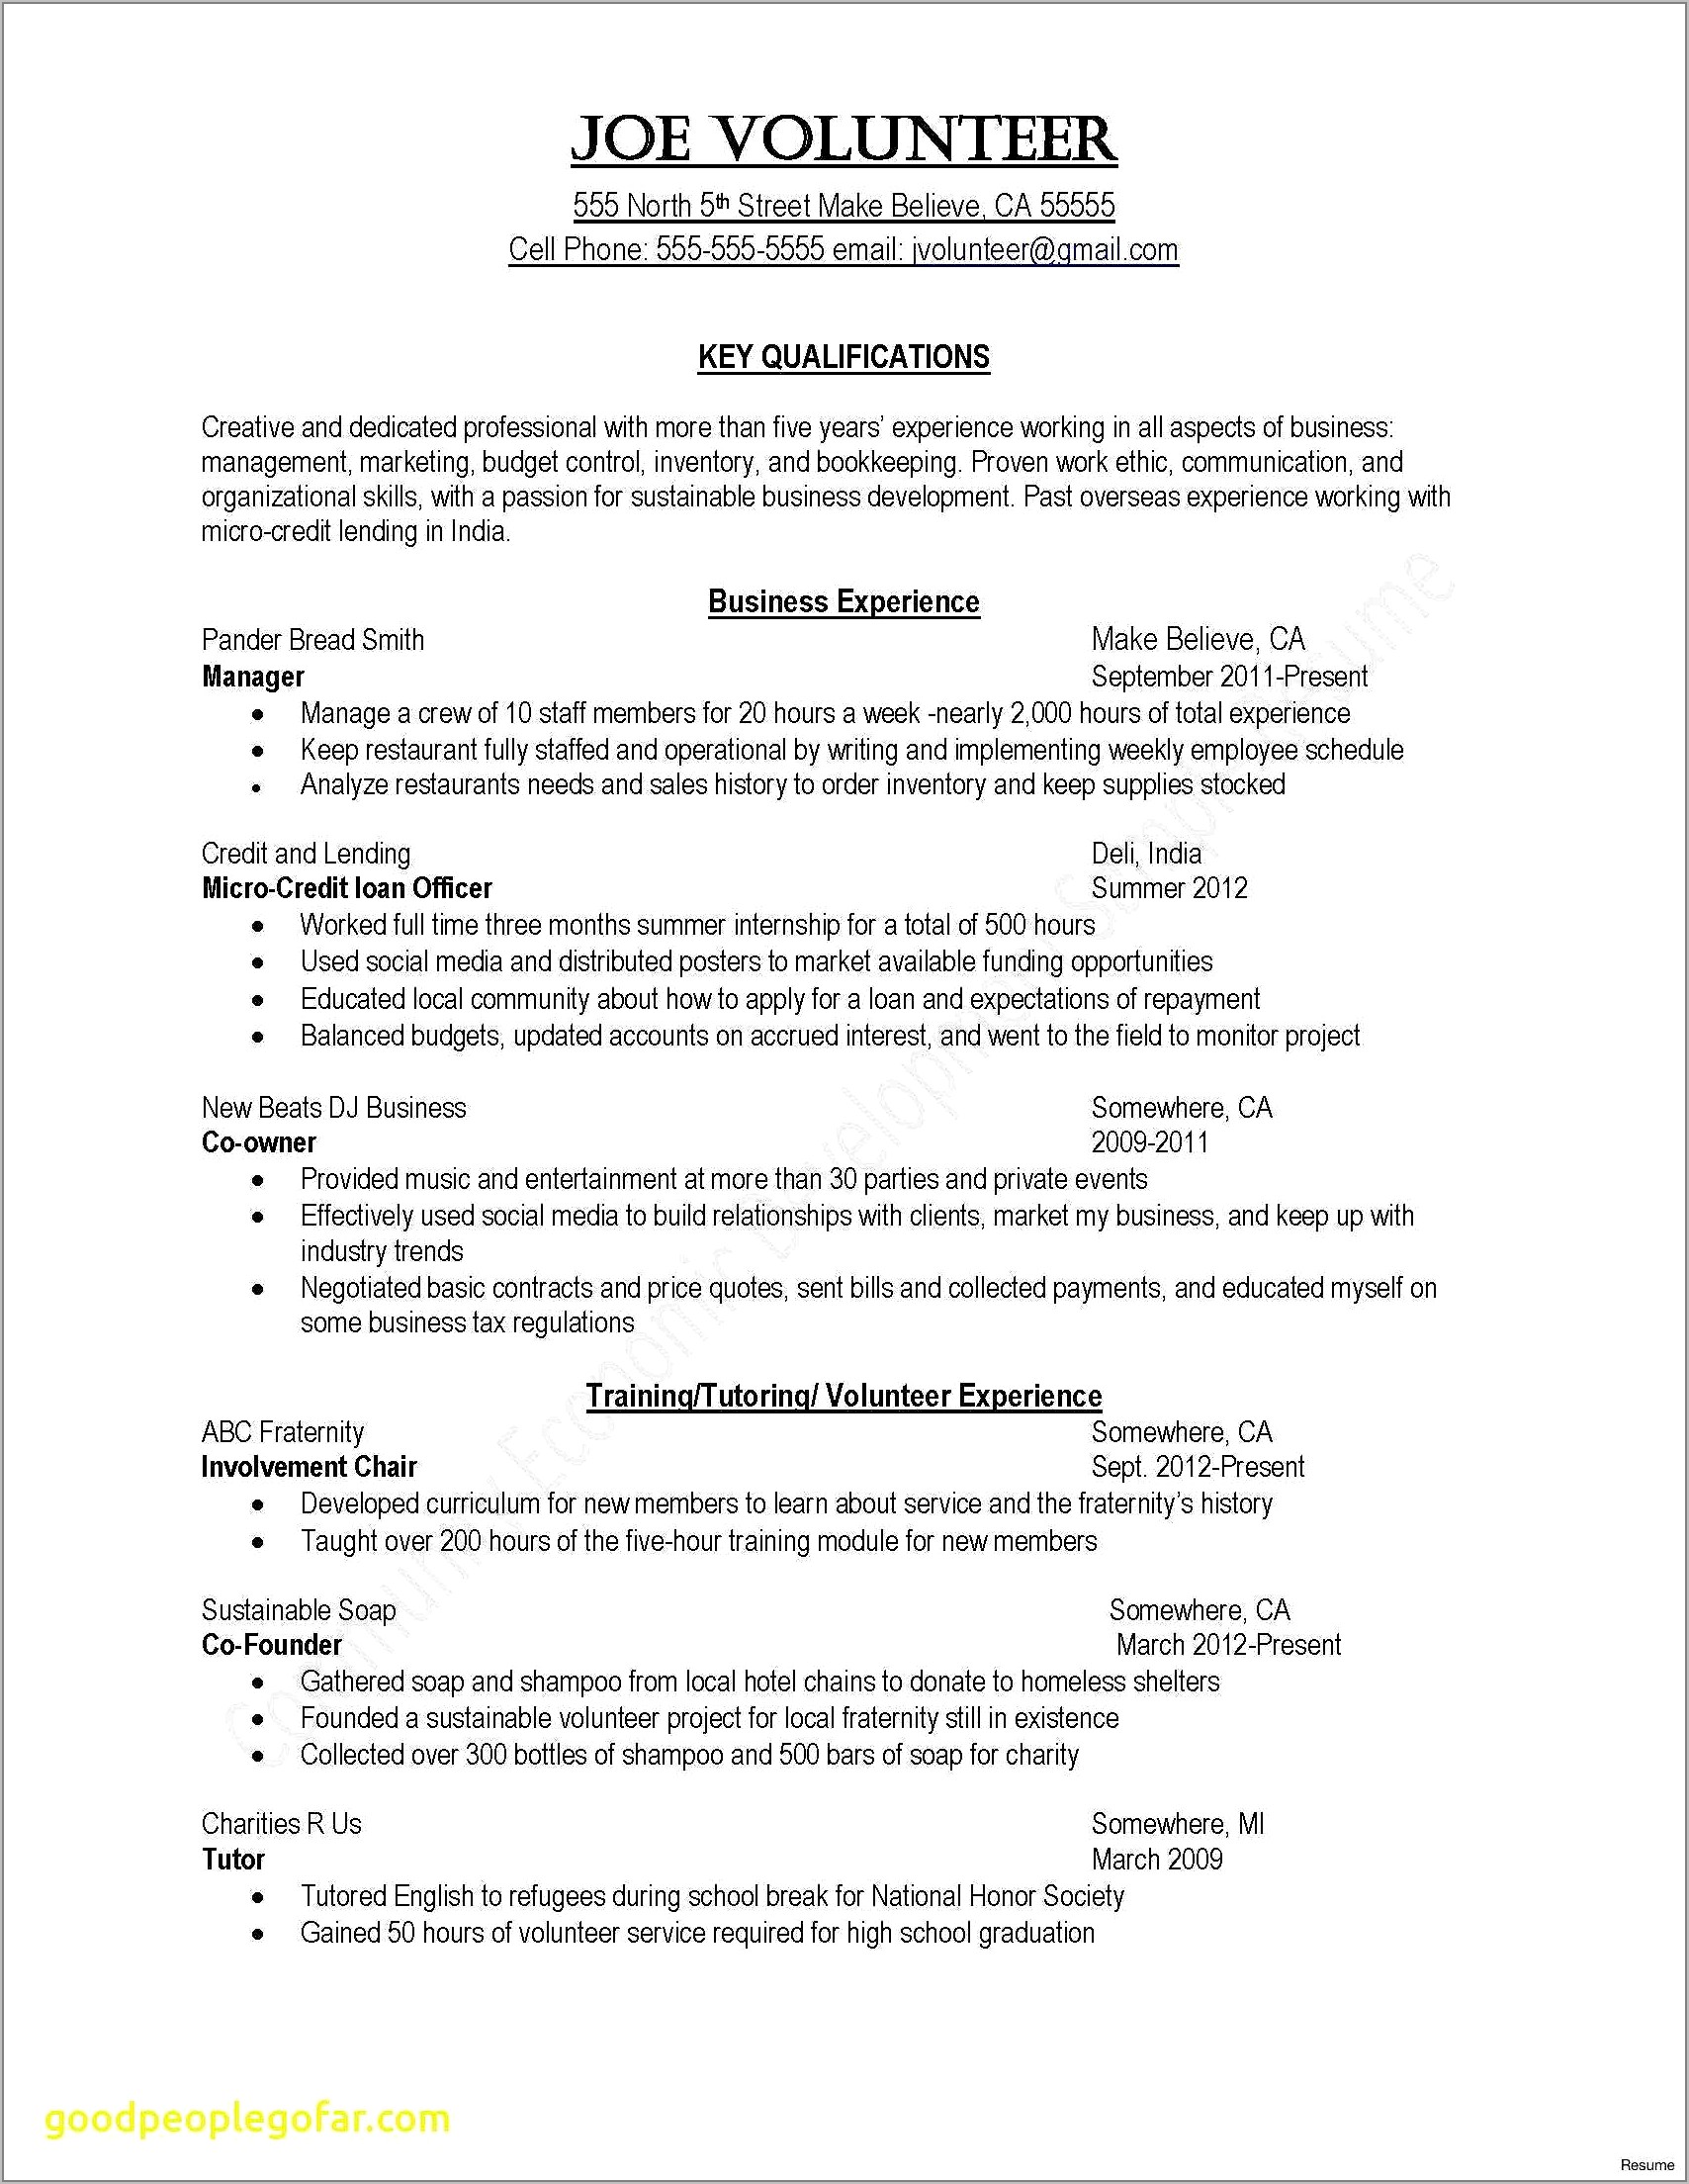 Resume Format For Aviation Job